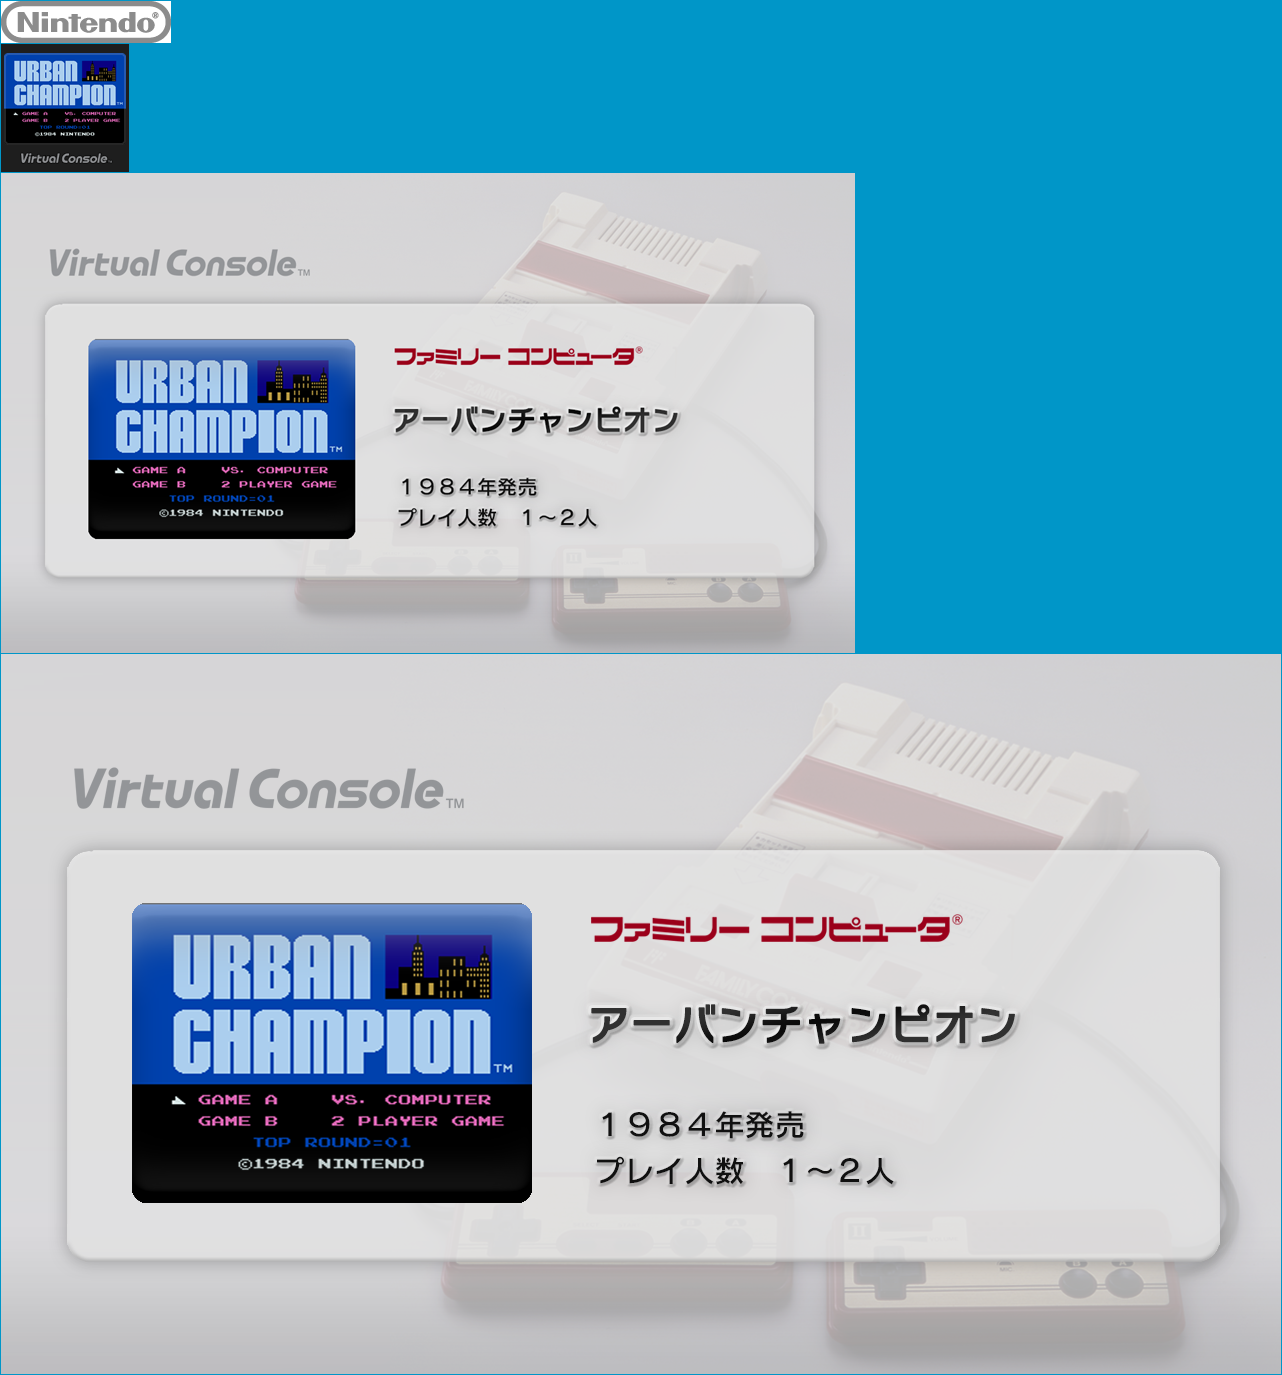 Virtual Console - Urban Champion